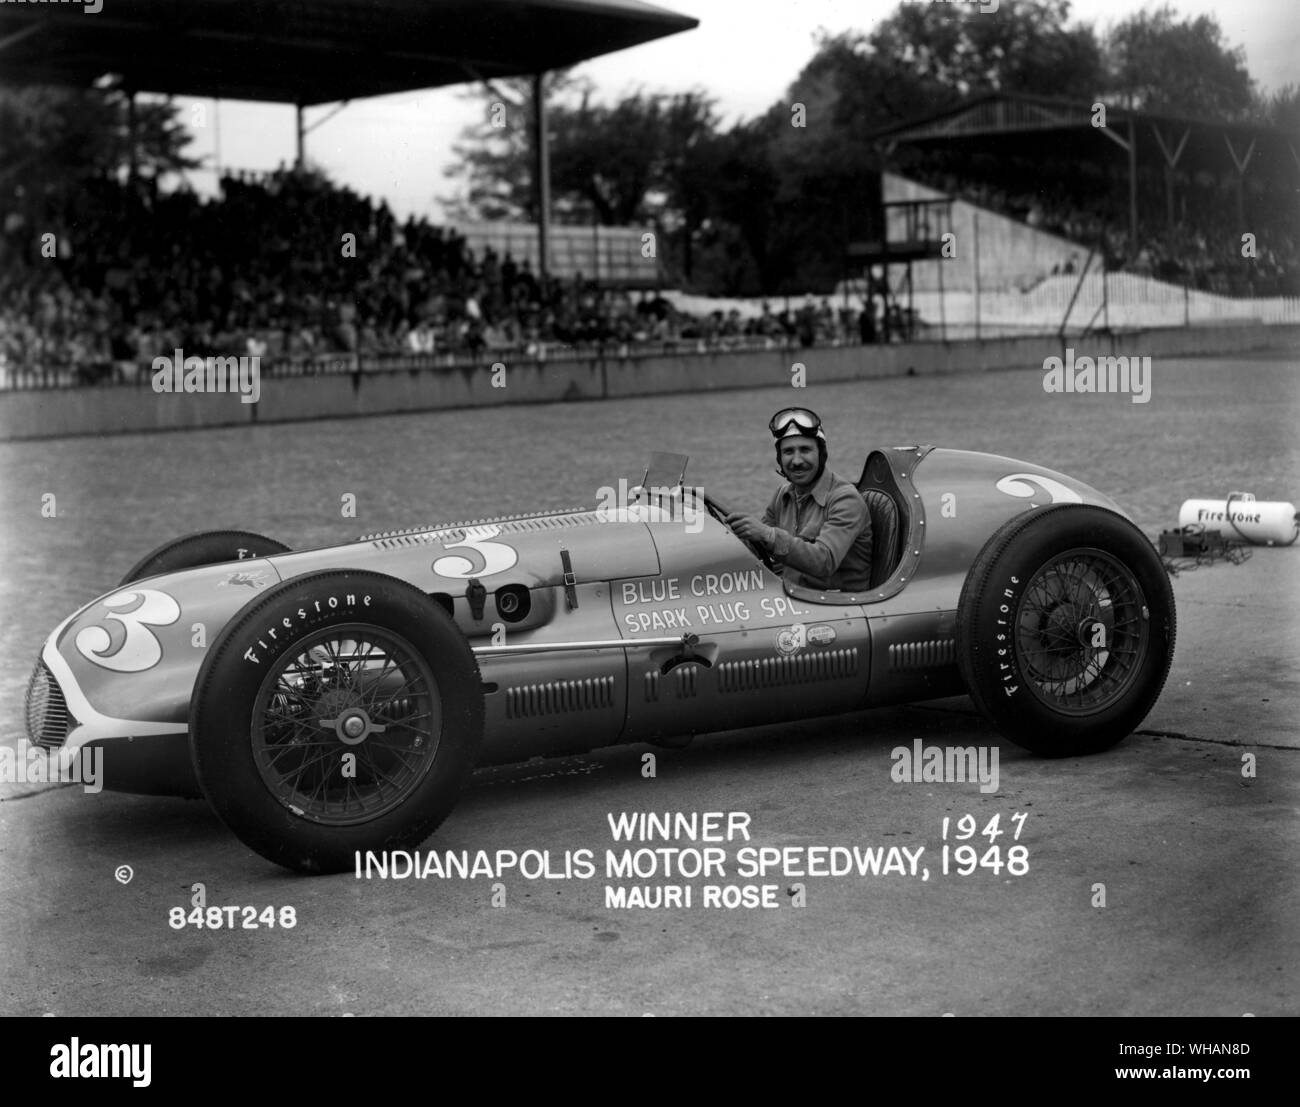 Indianapolis Motor Speedway 1947/8. Vincitore Mauri Rose. Corona blu speciale candela Foto Stock